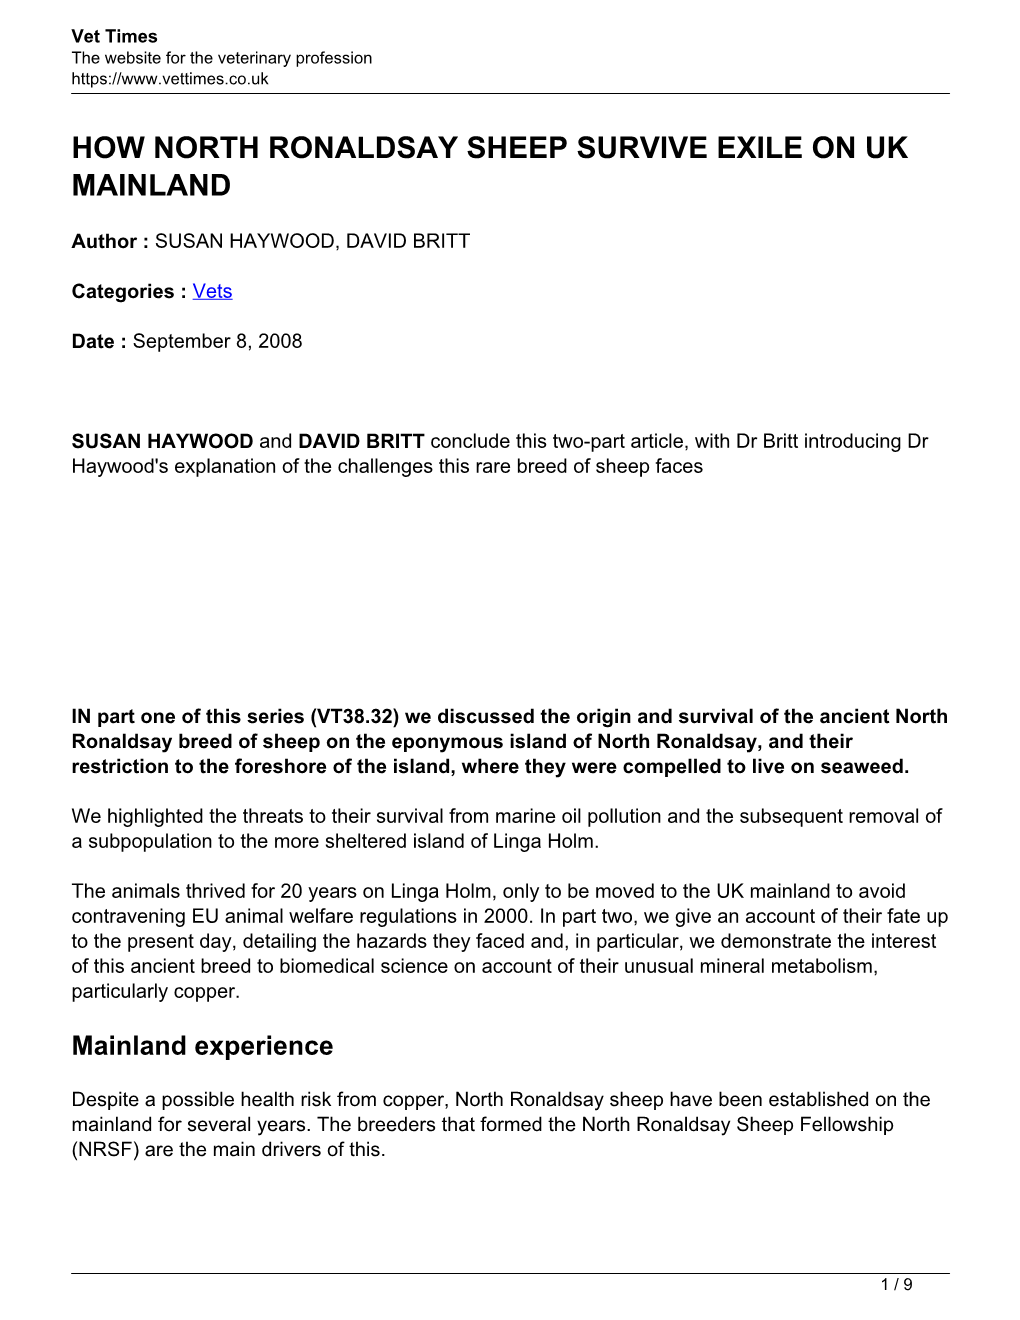 How North Ronaldsay Sheep Survive Exile on Uk Mainland